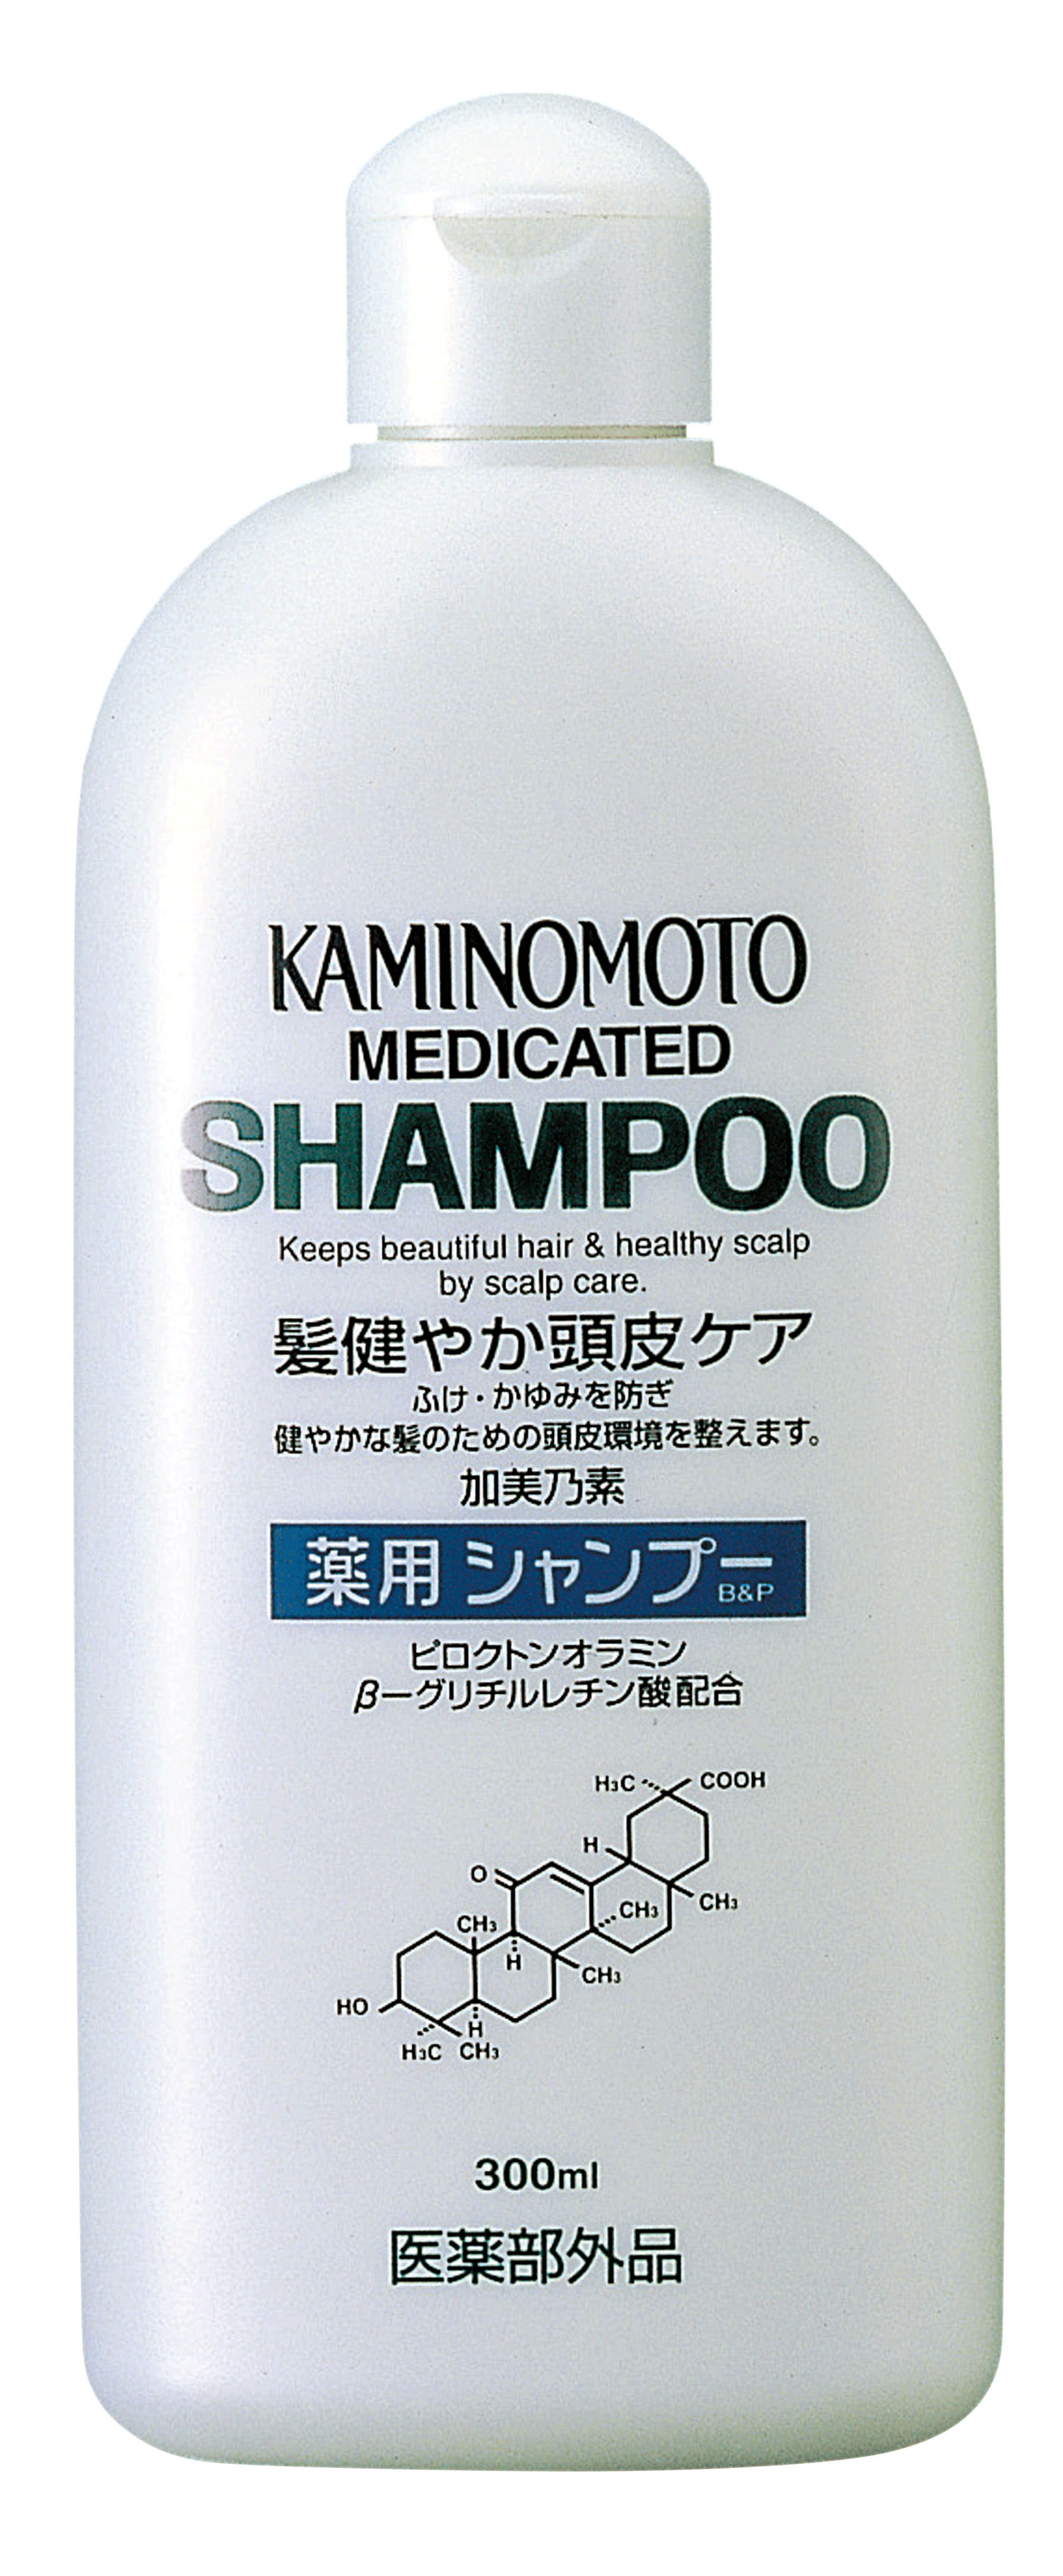 KAMINOMOTO MEDICATED SHAMPOO B&P